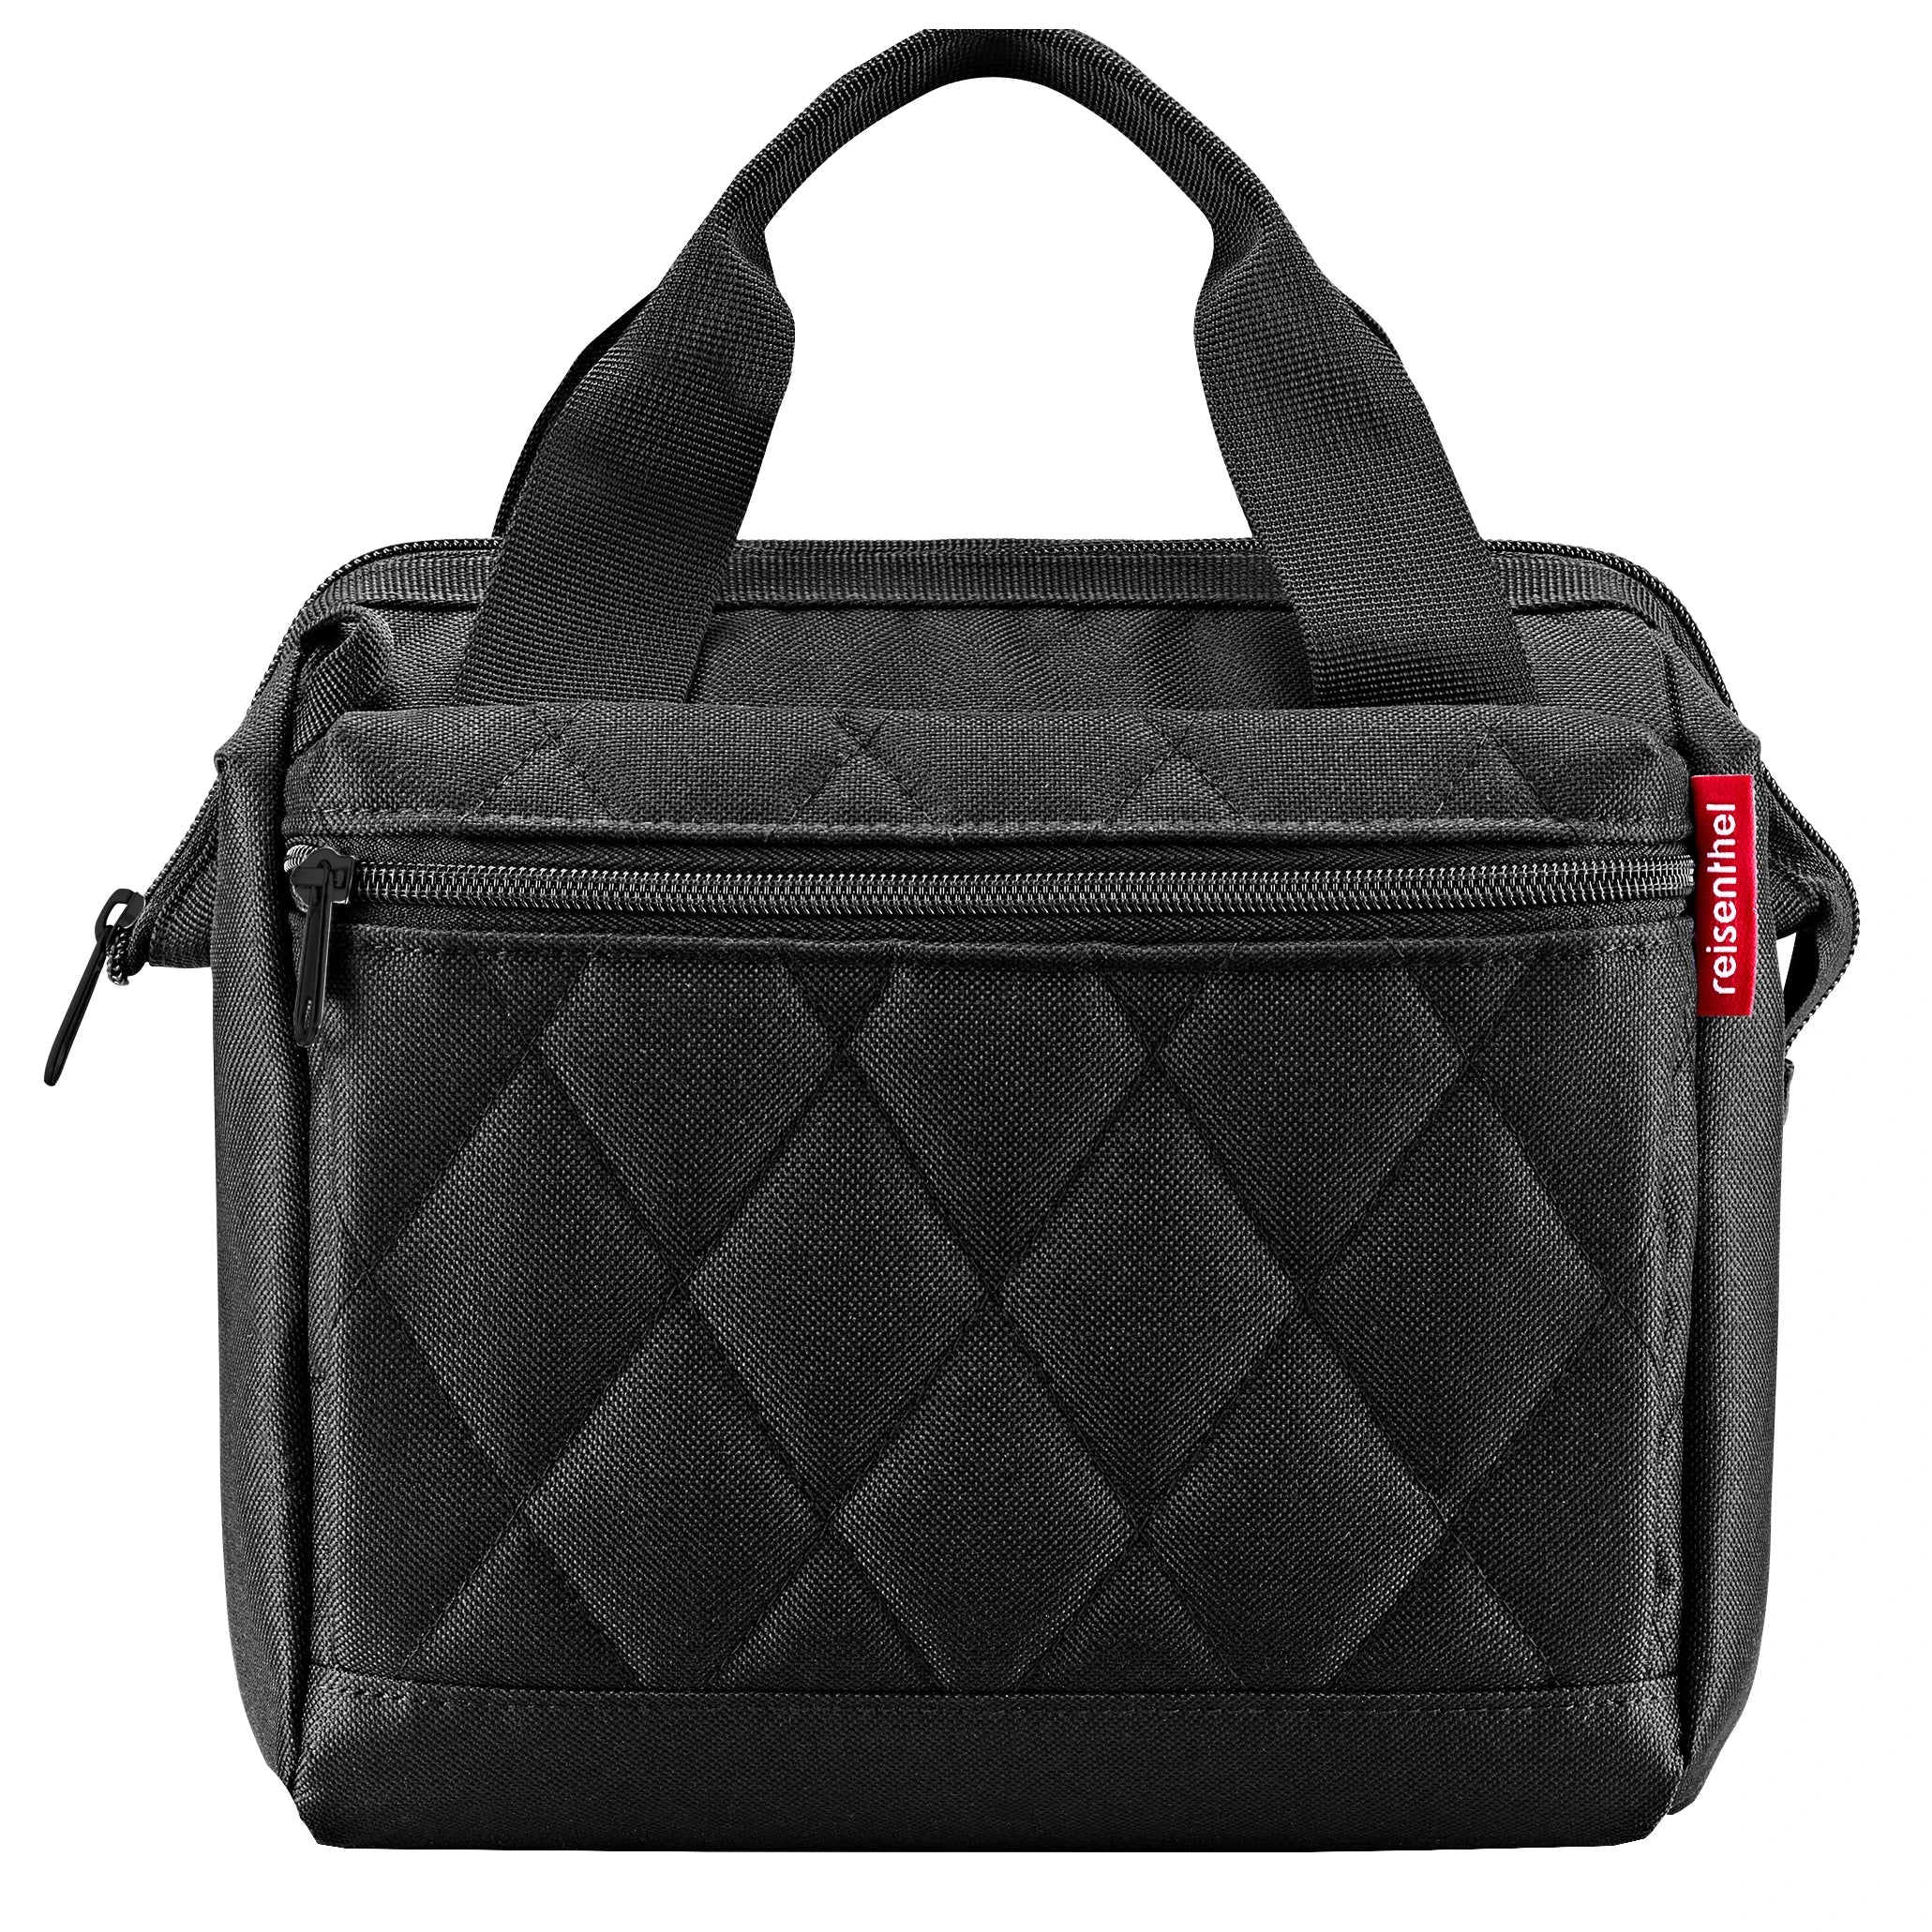 Reisenthel Rhombus Allrounder Cross Shoulder Bag 24 cm - Black